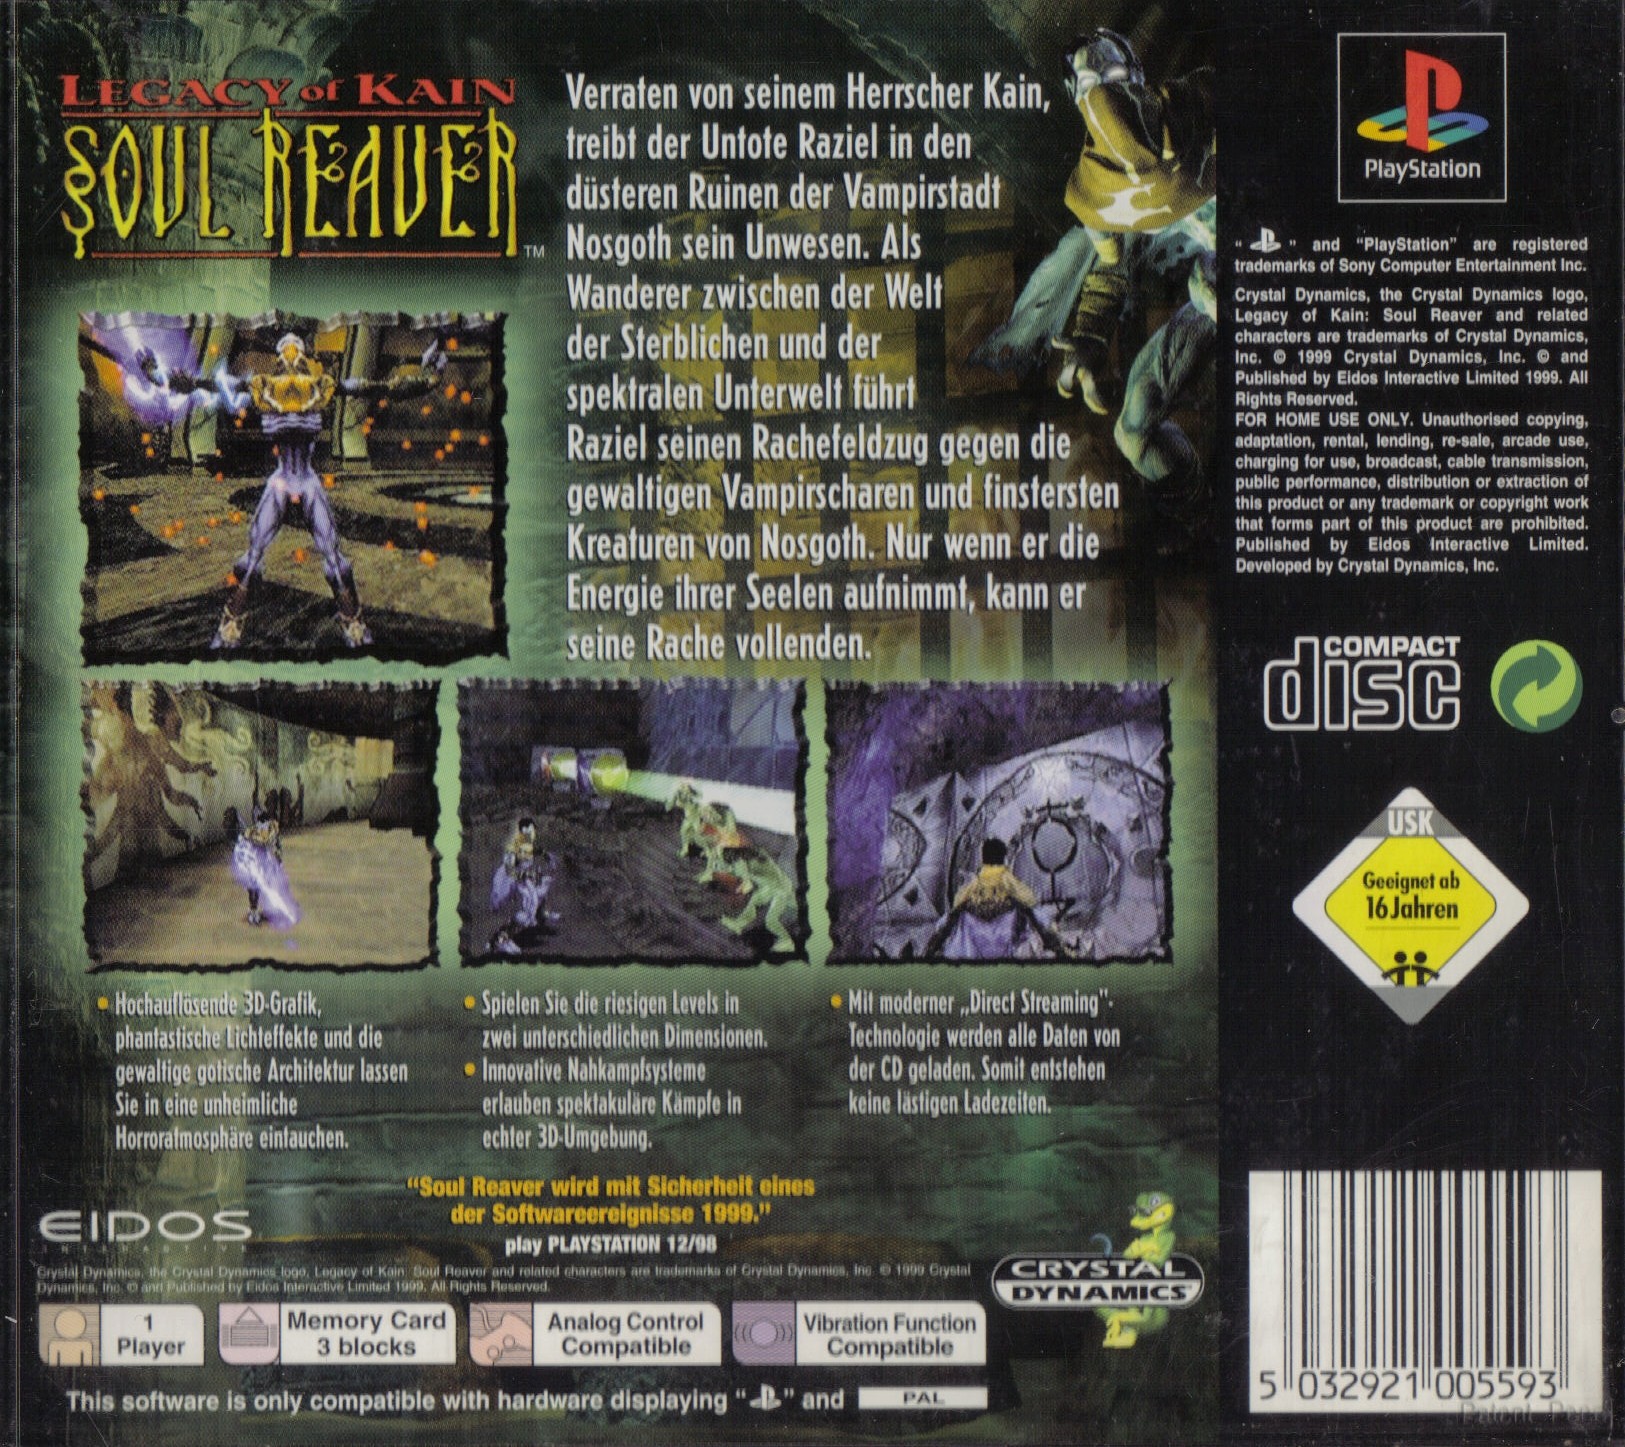 Soul ps1. Каин на пс1. Legacy of Kain Soul Reaver ps1 Disk. Legacy of Kain Soul Reaver ps1 Cover. Legacy of Kain Soul Reaver ps1 обложка.